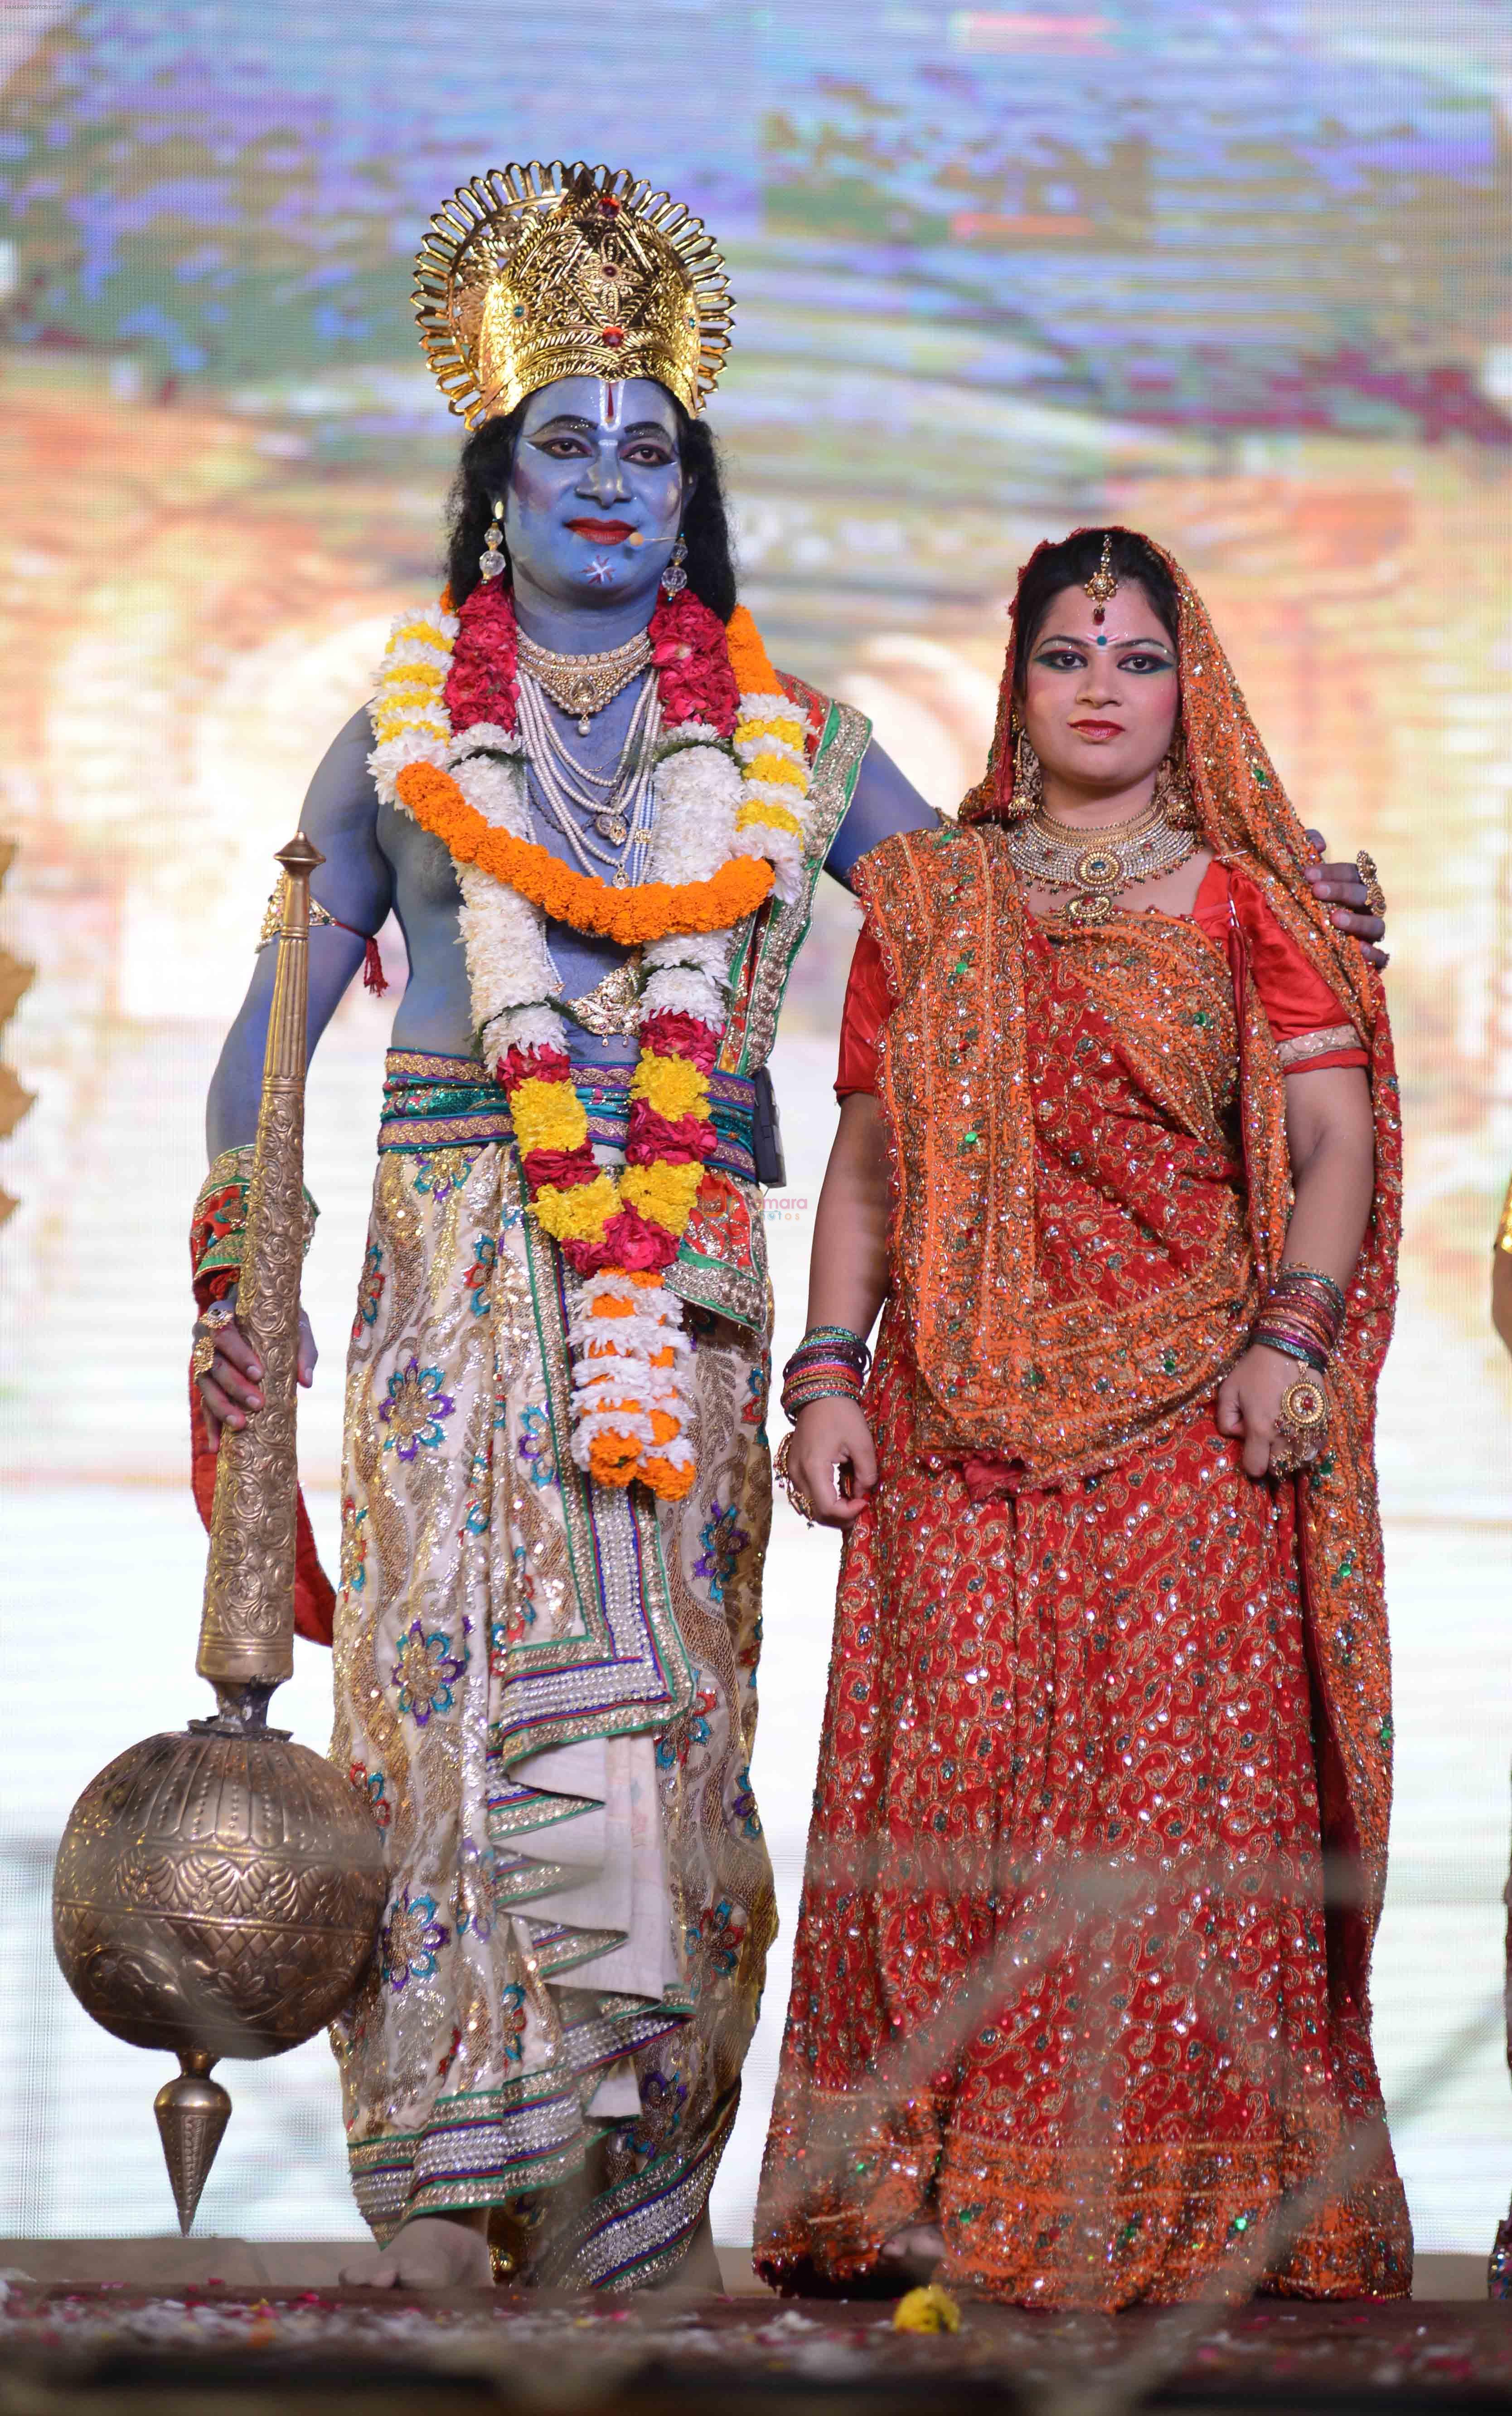 Vishnu & laxmi Playing the Ram leela at Luv Kush ram Leela committee at Lal Qila maidan in Delhi on 13th Oct 2015